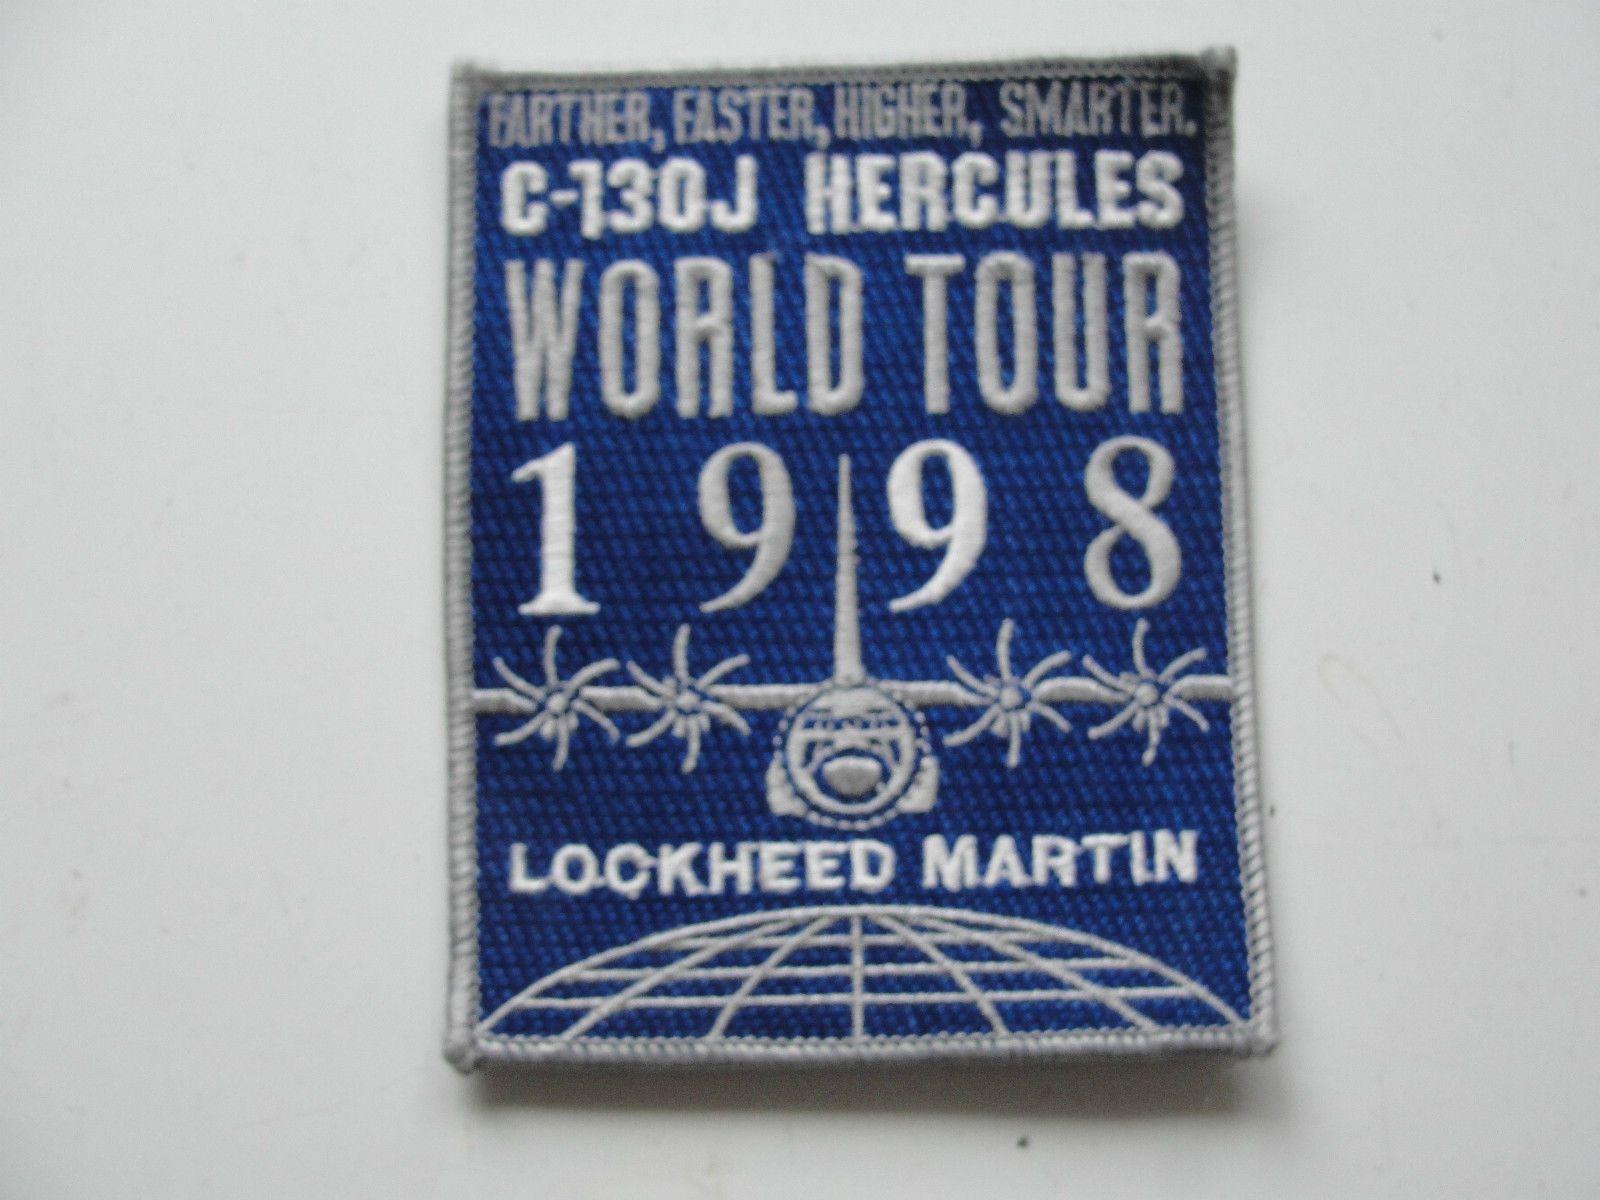 Old Lockheed Logo - C-130J HERCULES WORLD TOUR 1998 LOCKHEED MARTIN,ORIGINAL COLLECTIBLE ...